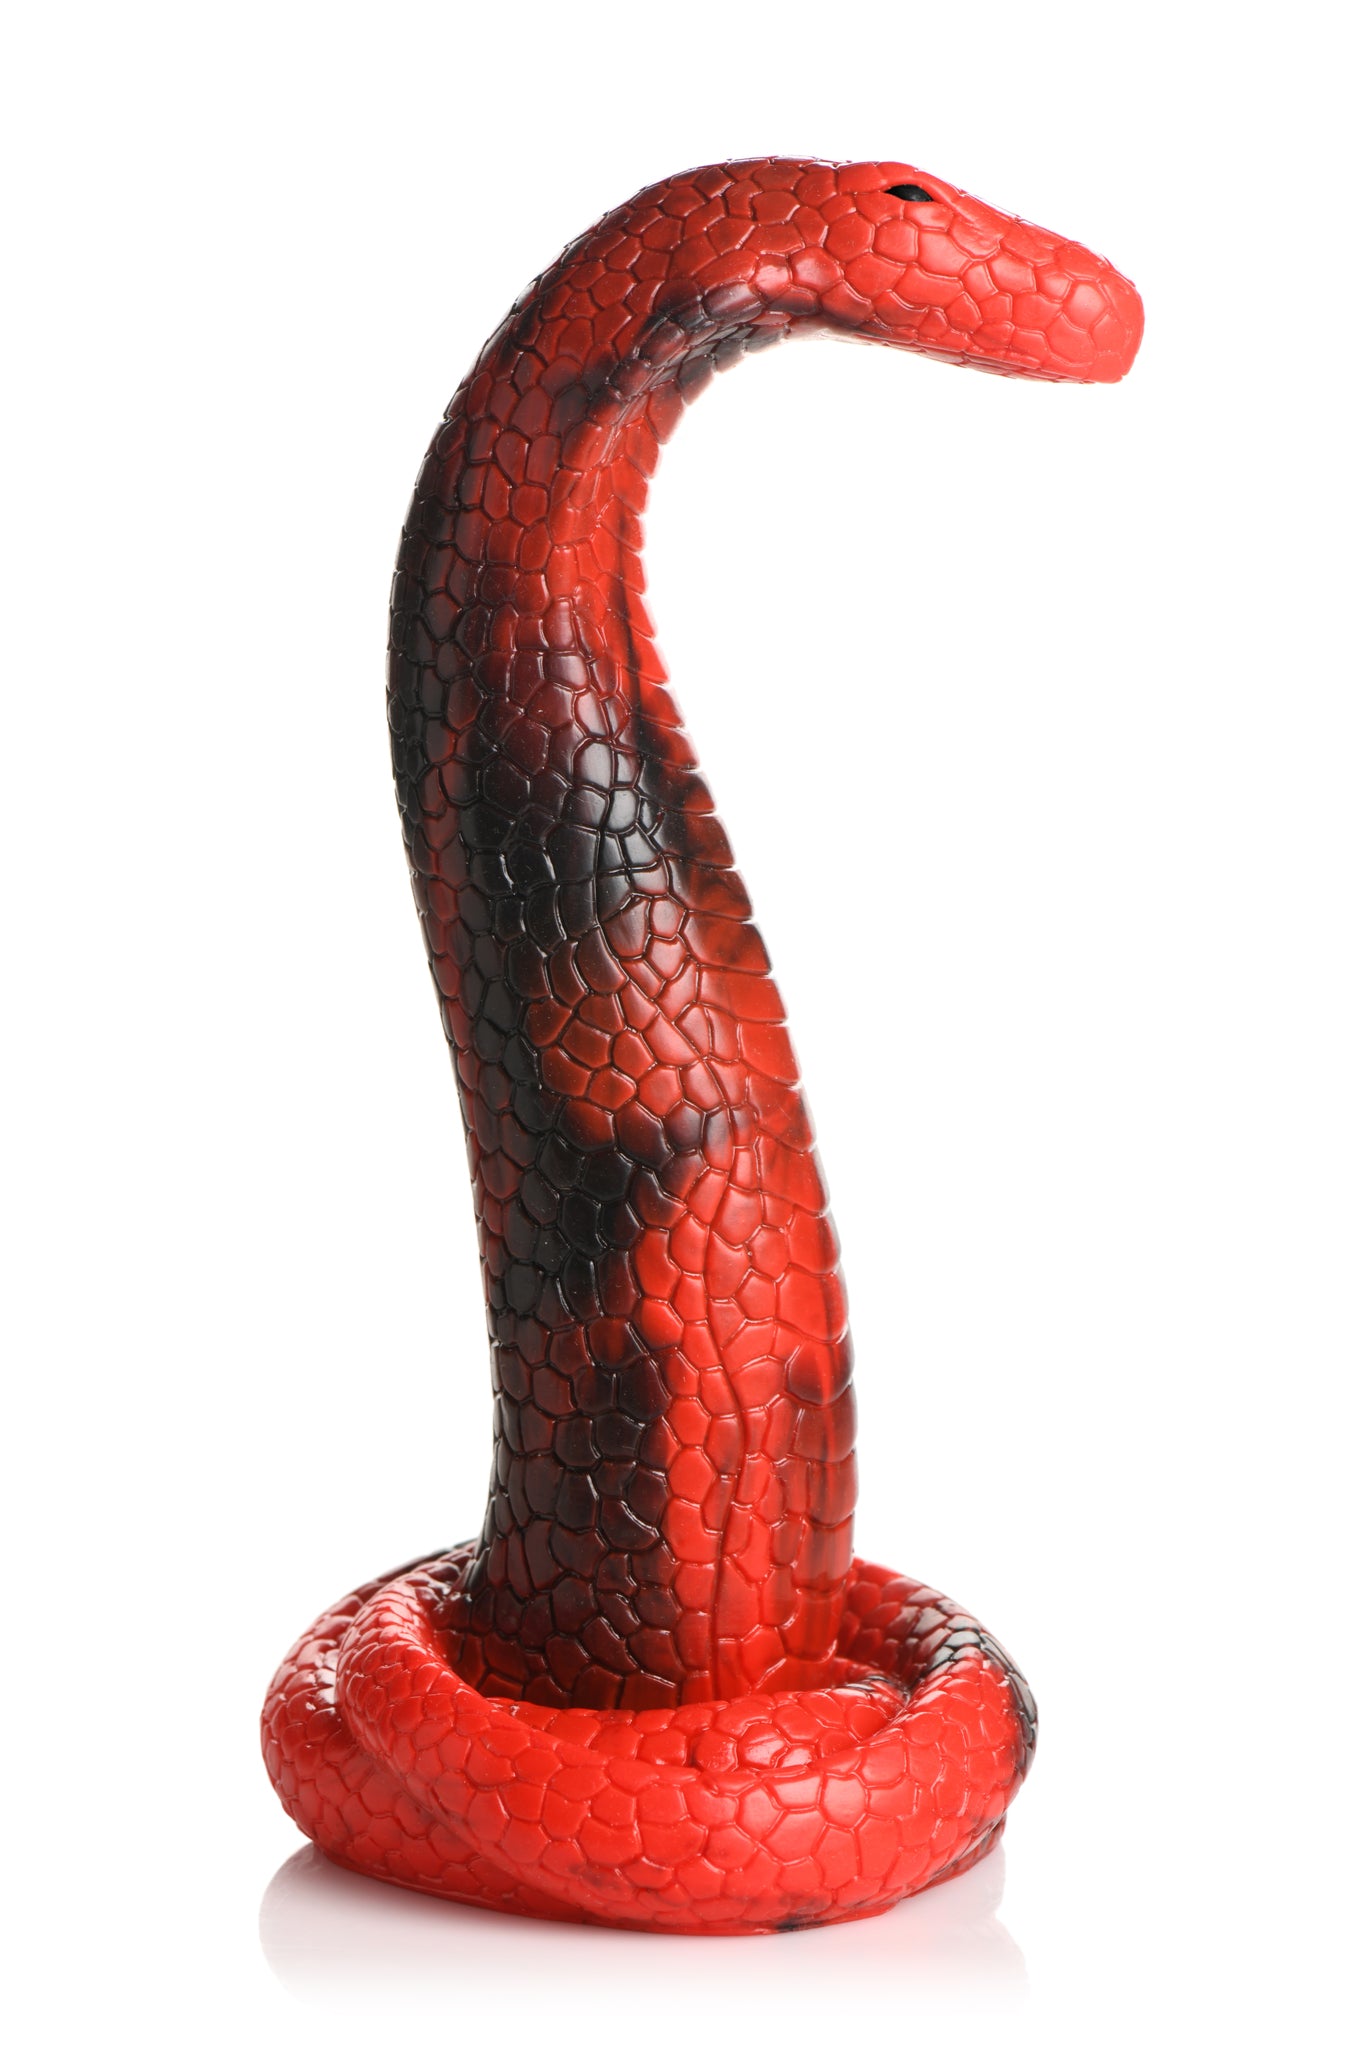 Creature Cocks: King Cobra